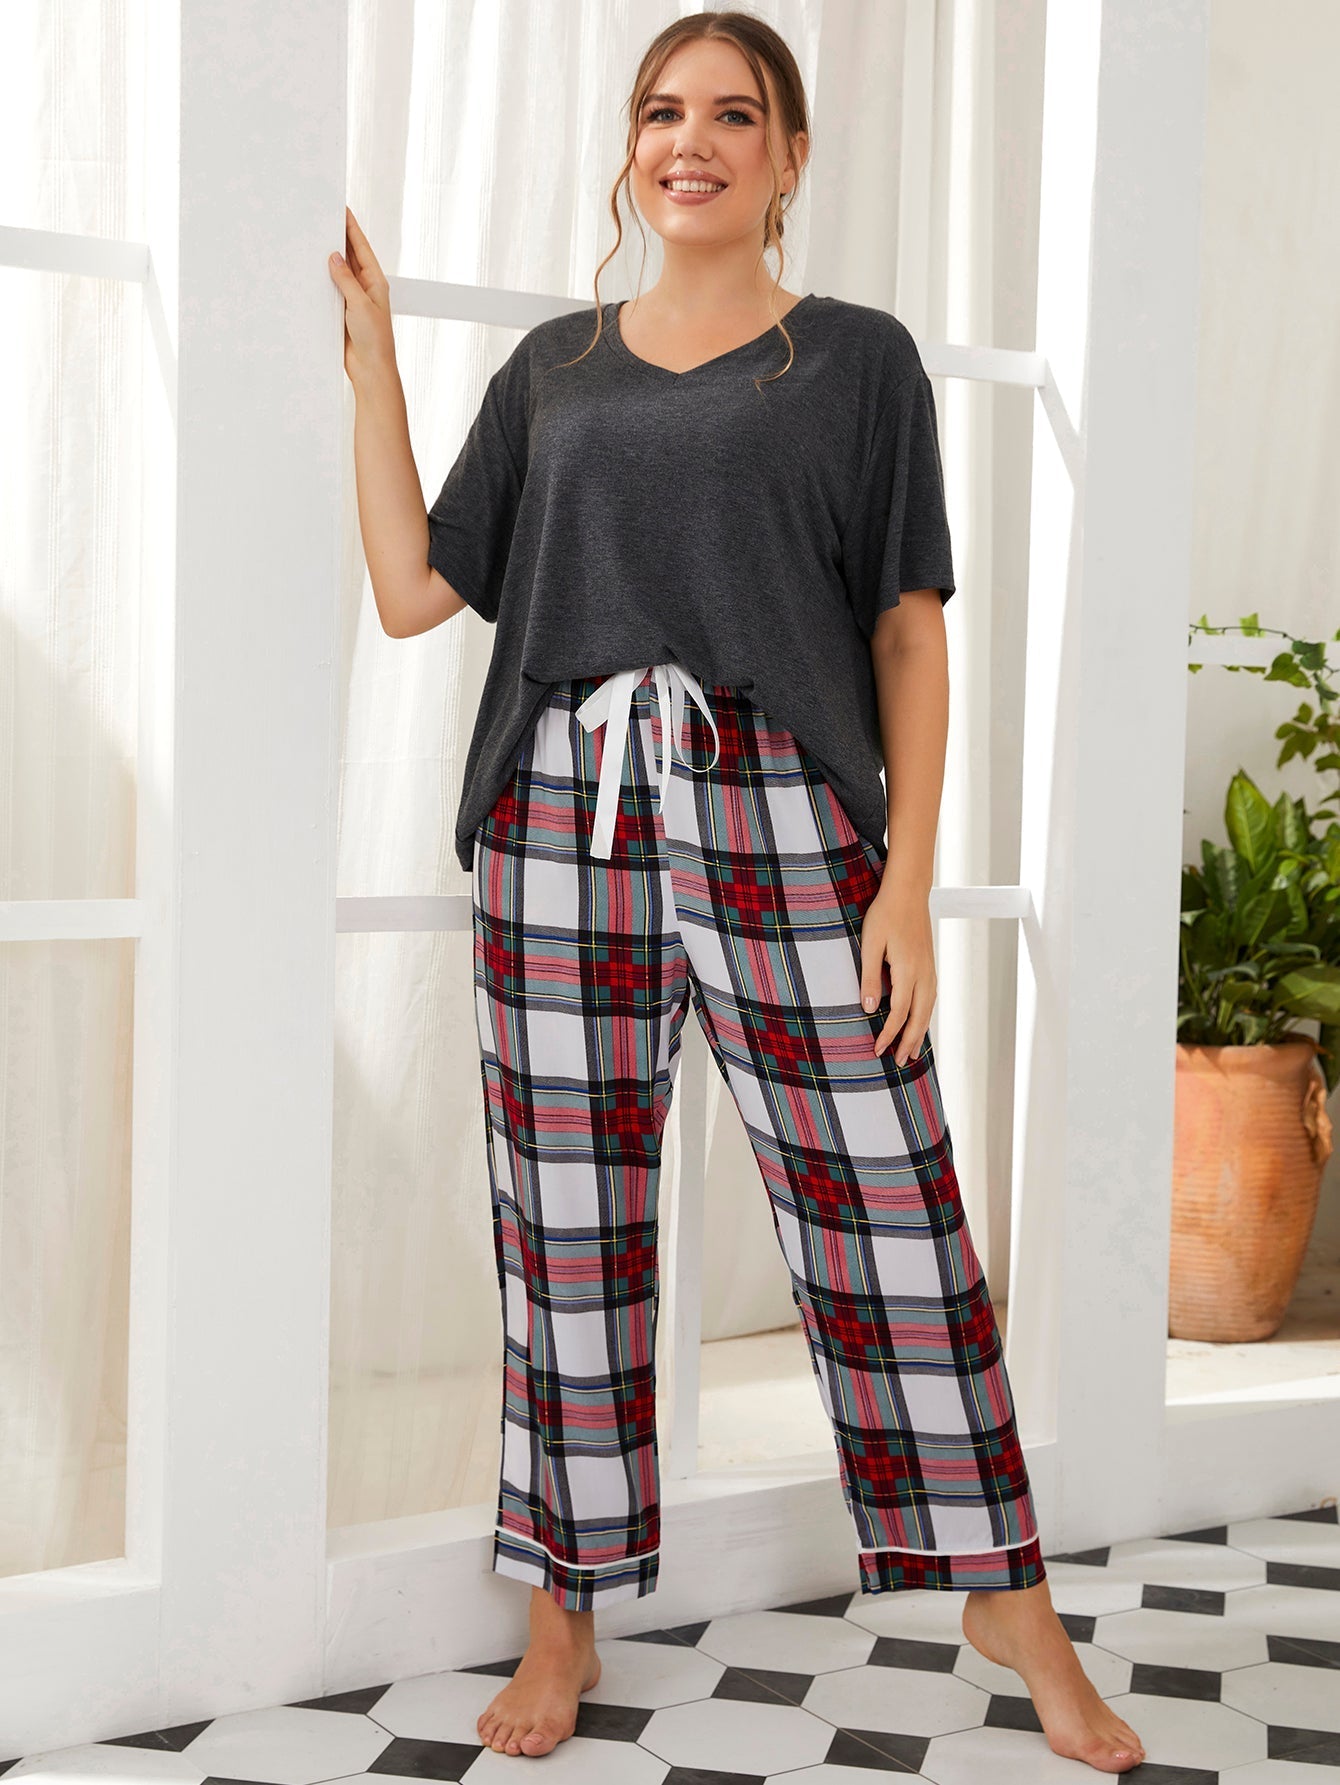 Plus Size 1XL-4LX Women's Sleepwear Short Sleeves Top with plaid Pants 2pcs Pajama Set Sai Feel